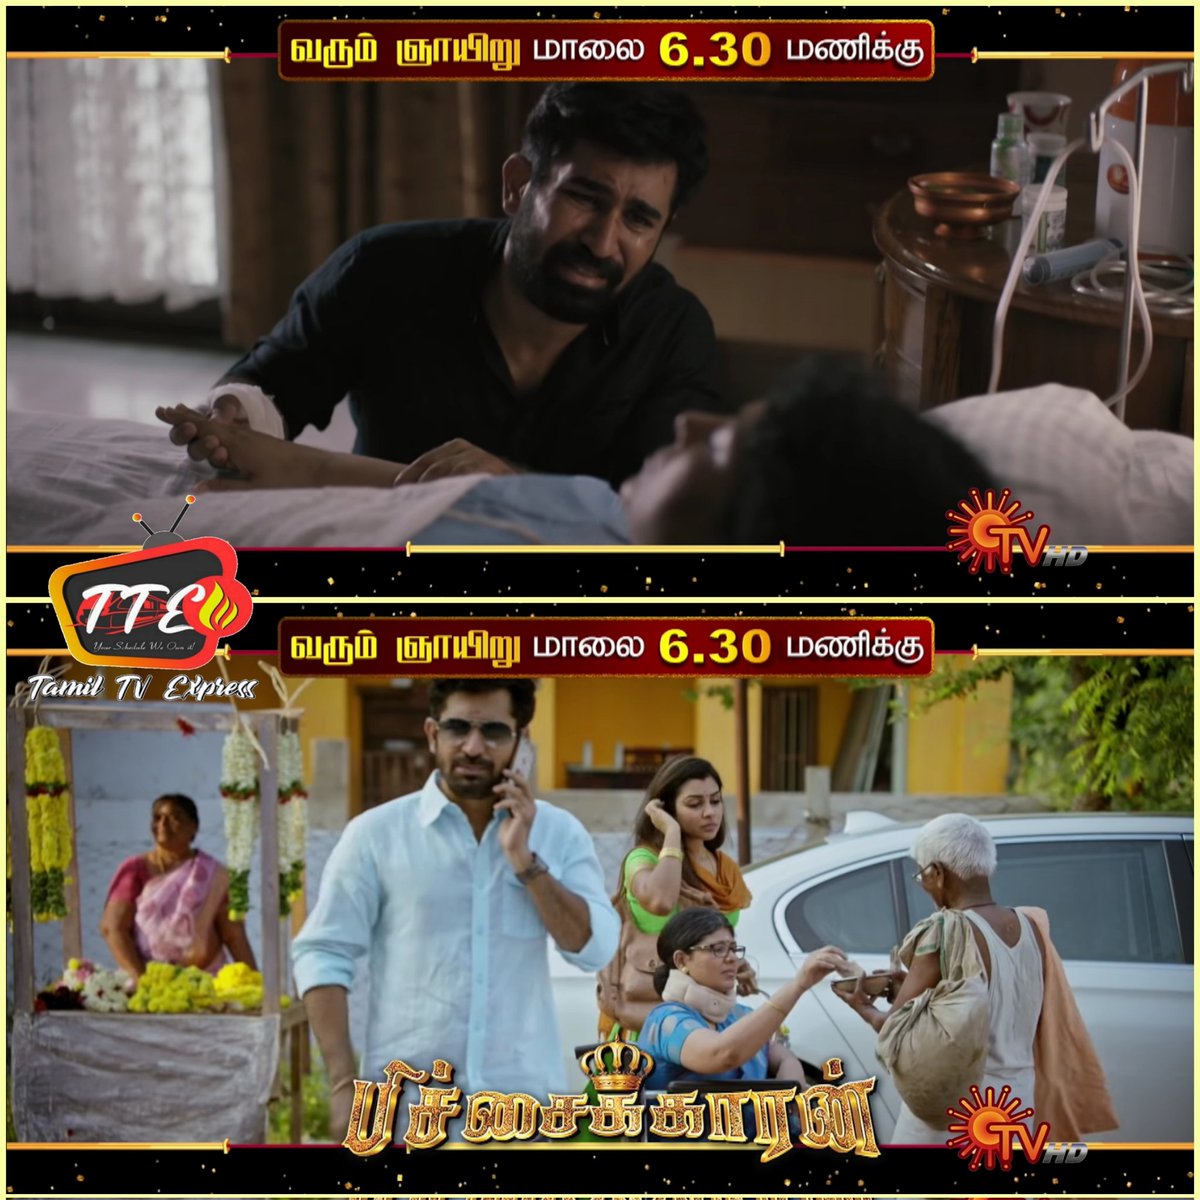 Blockbuster Movie
#Pichaikkaran 
Sunday at 6.30pm on #SunTV 

@vijayantony #SatnaTitus #VijayAntony #KodiyilOruvan